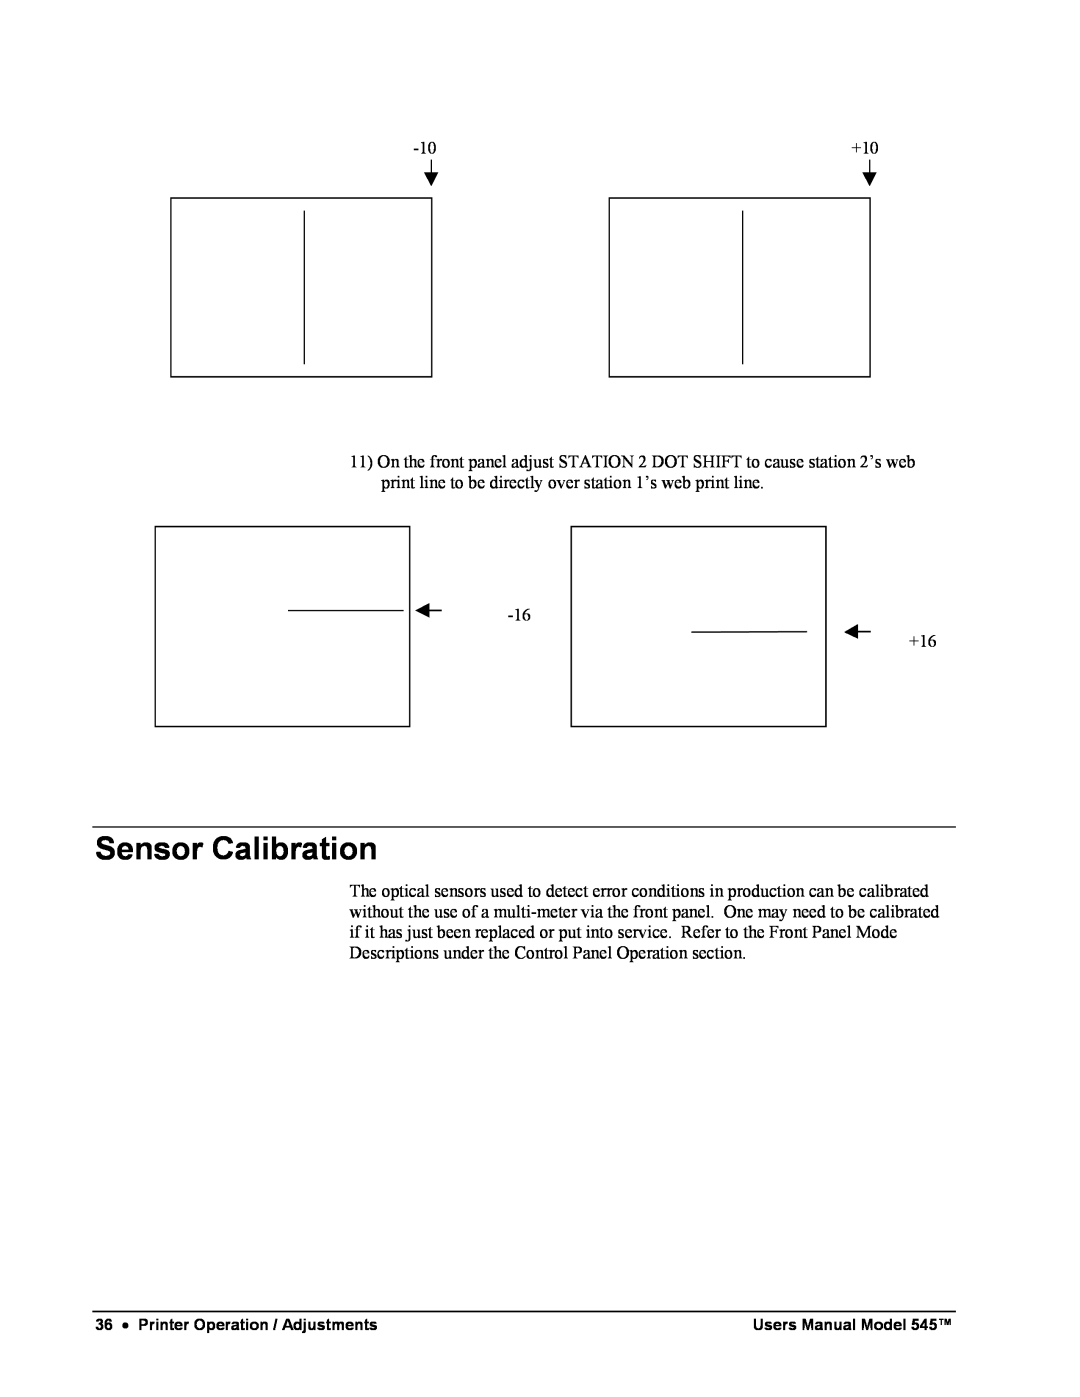 Paxar 545 user manual Sensor Calibration 